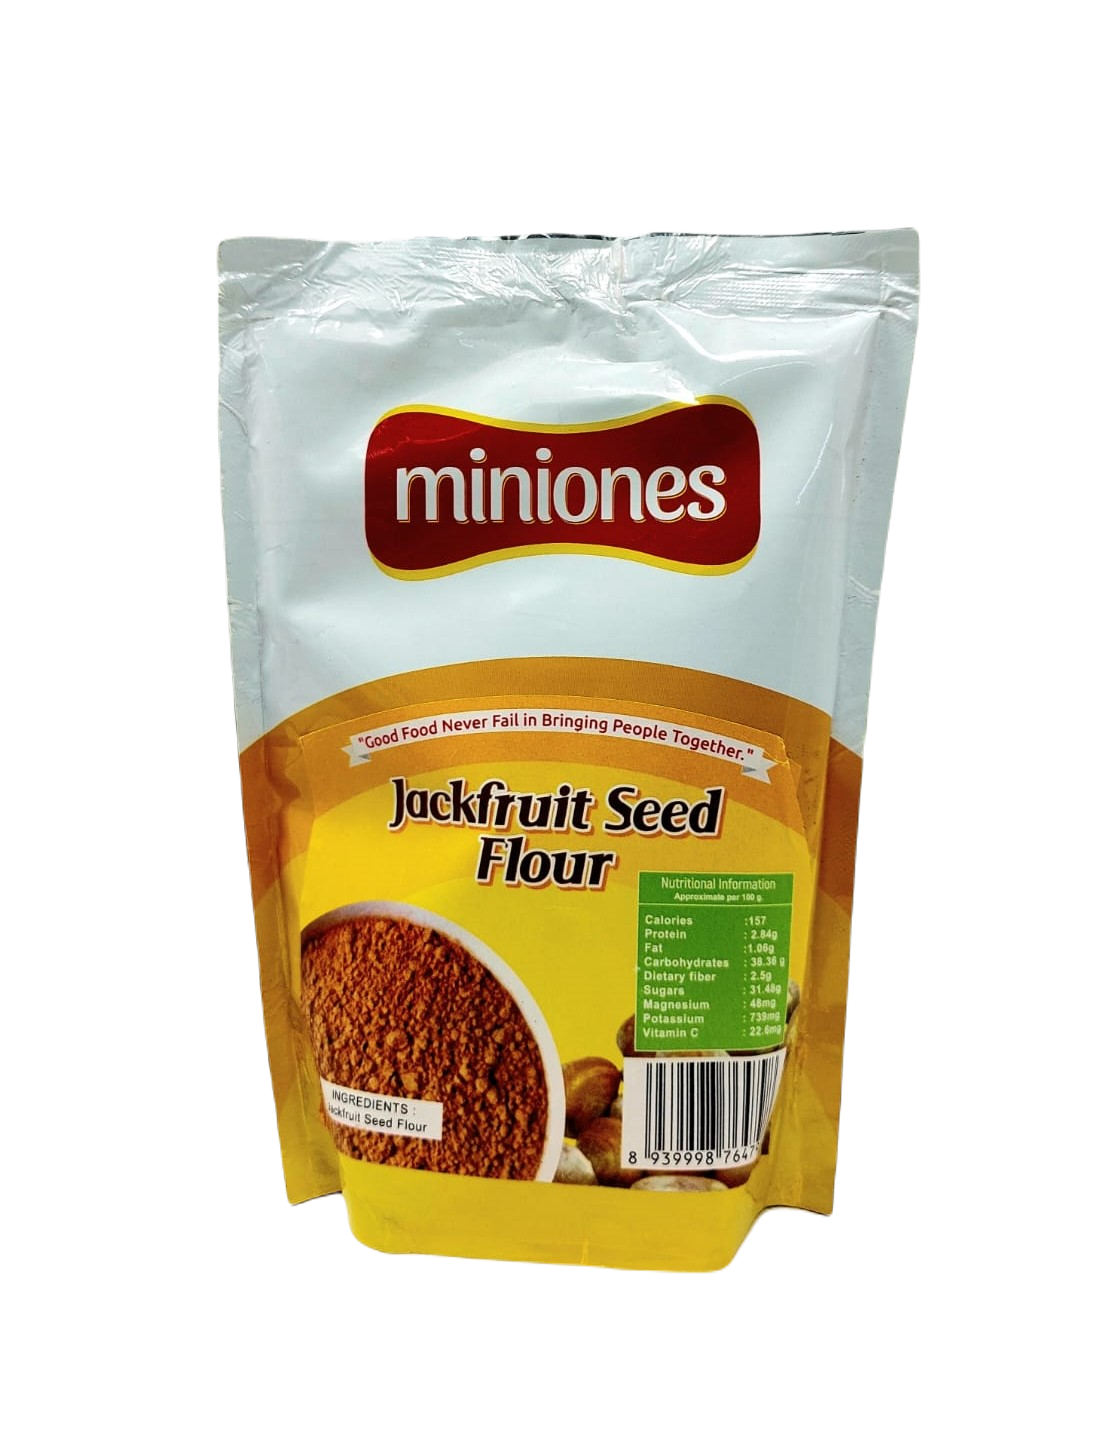 Jackfruit Seed Flour